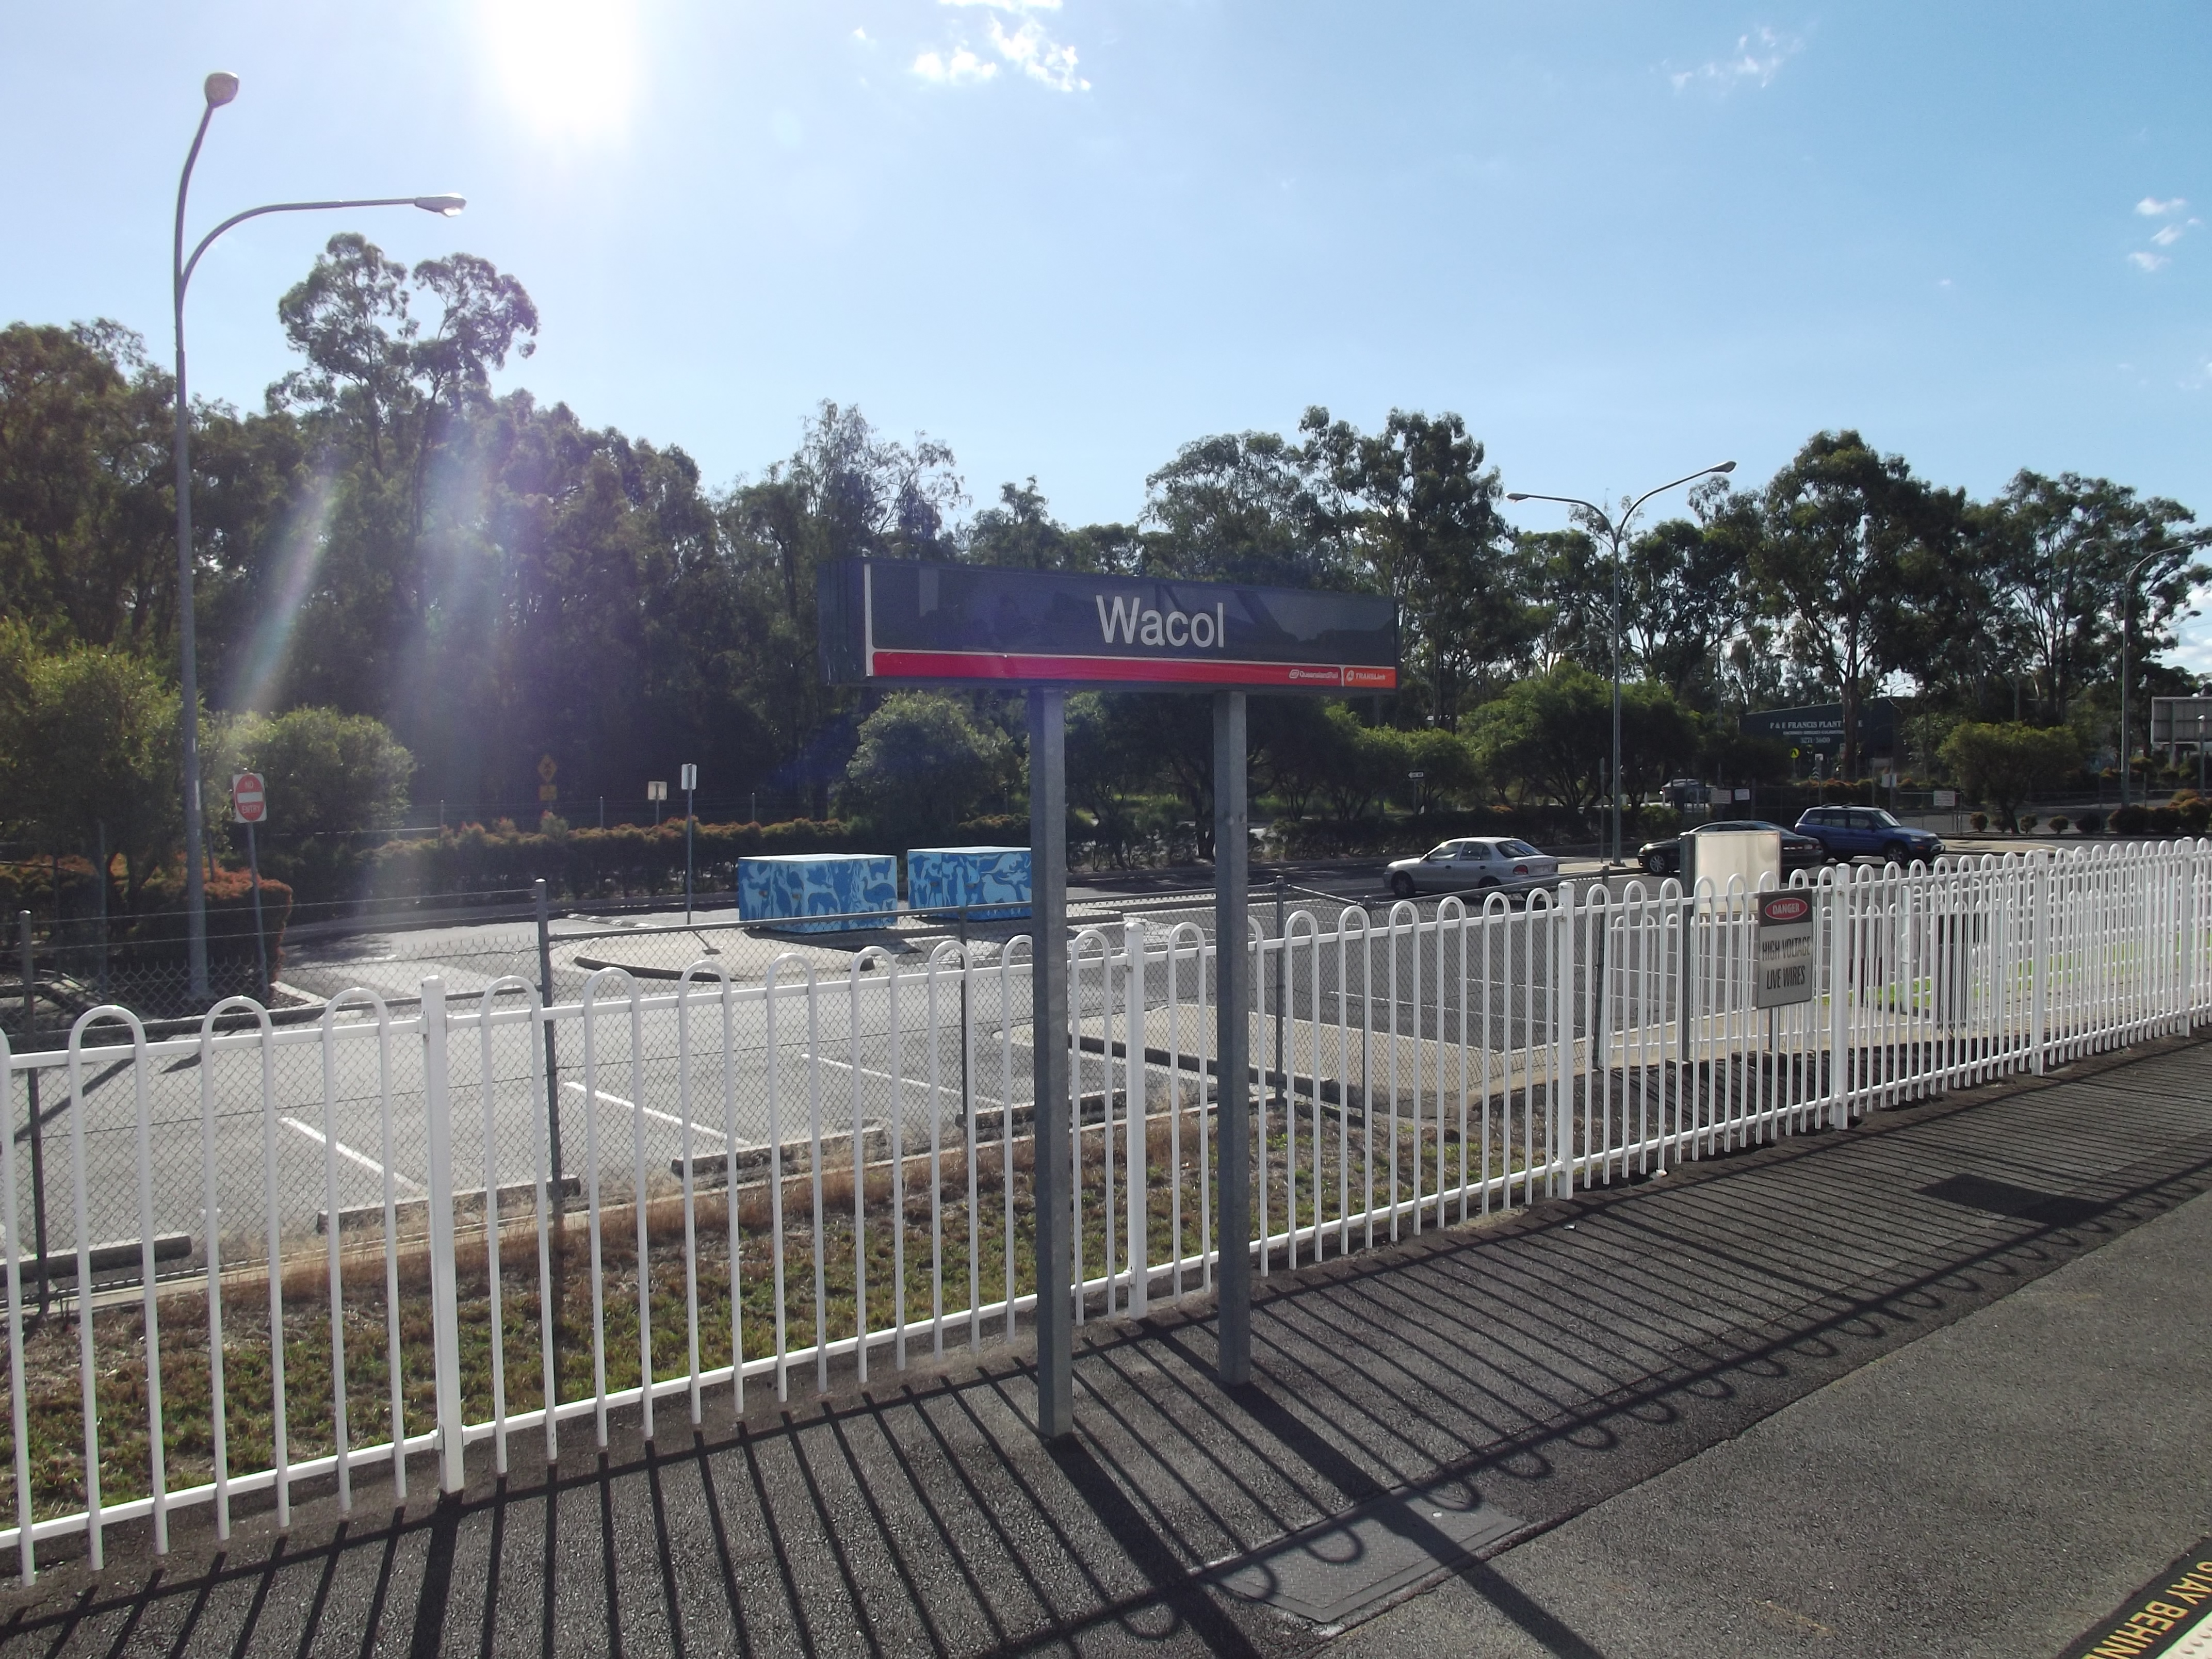 https://upload.wikimedia.org/wikipedia/commons/e/e1/Wacol_Railway_Station%2C_Queensland%2C_May_2012.JPG